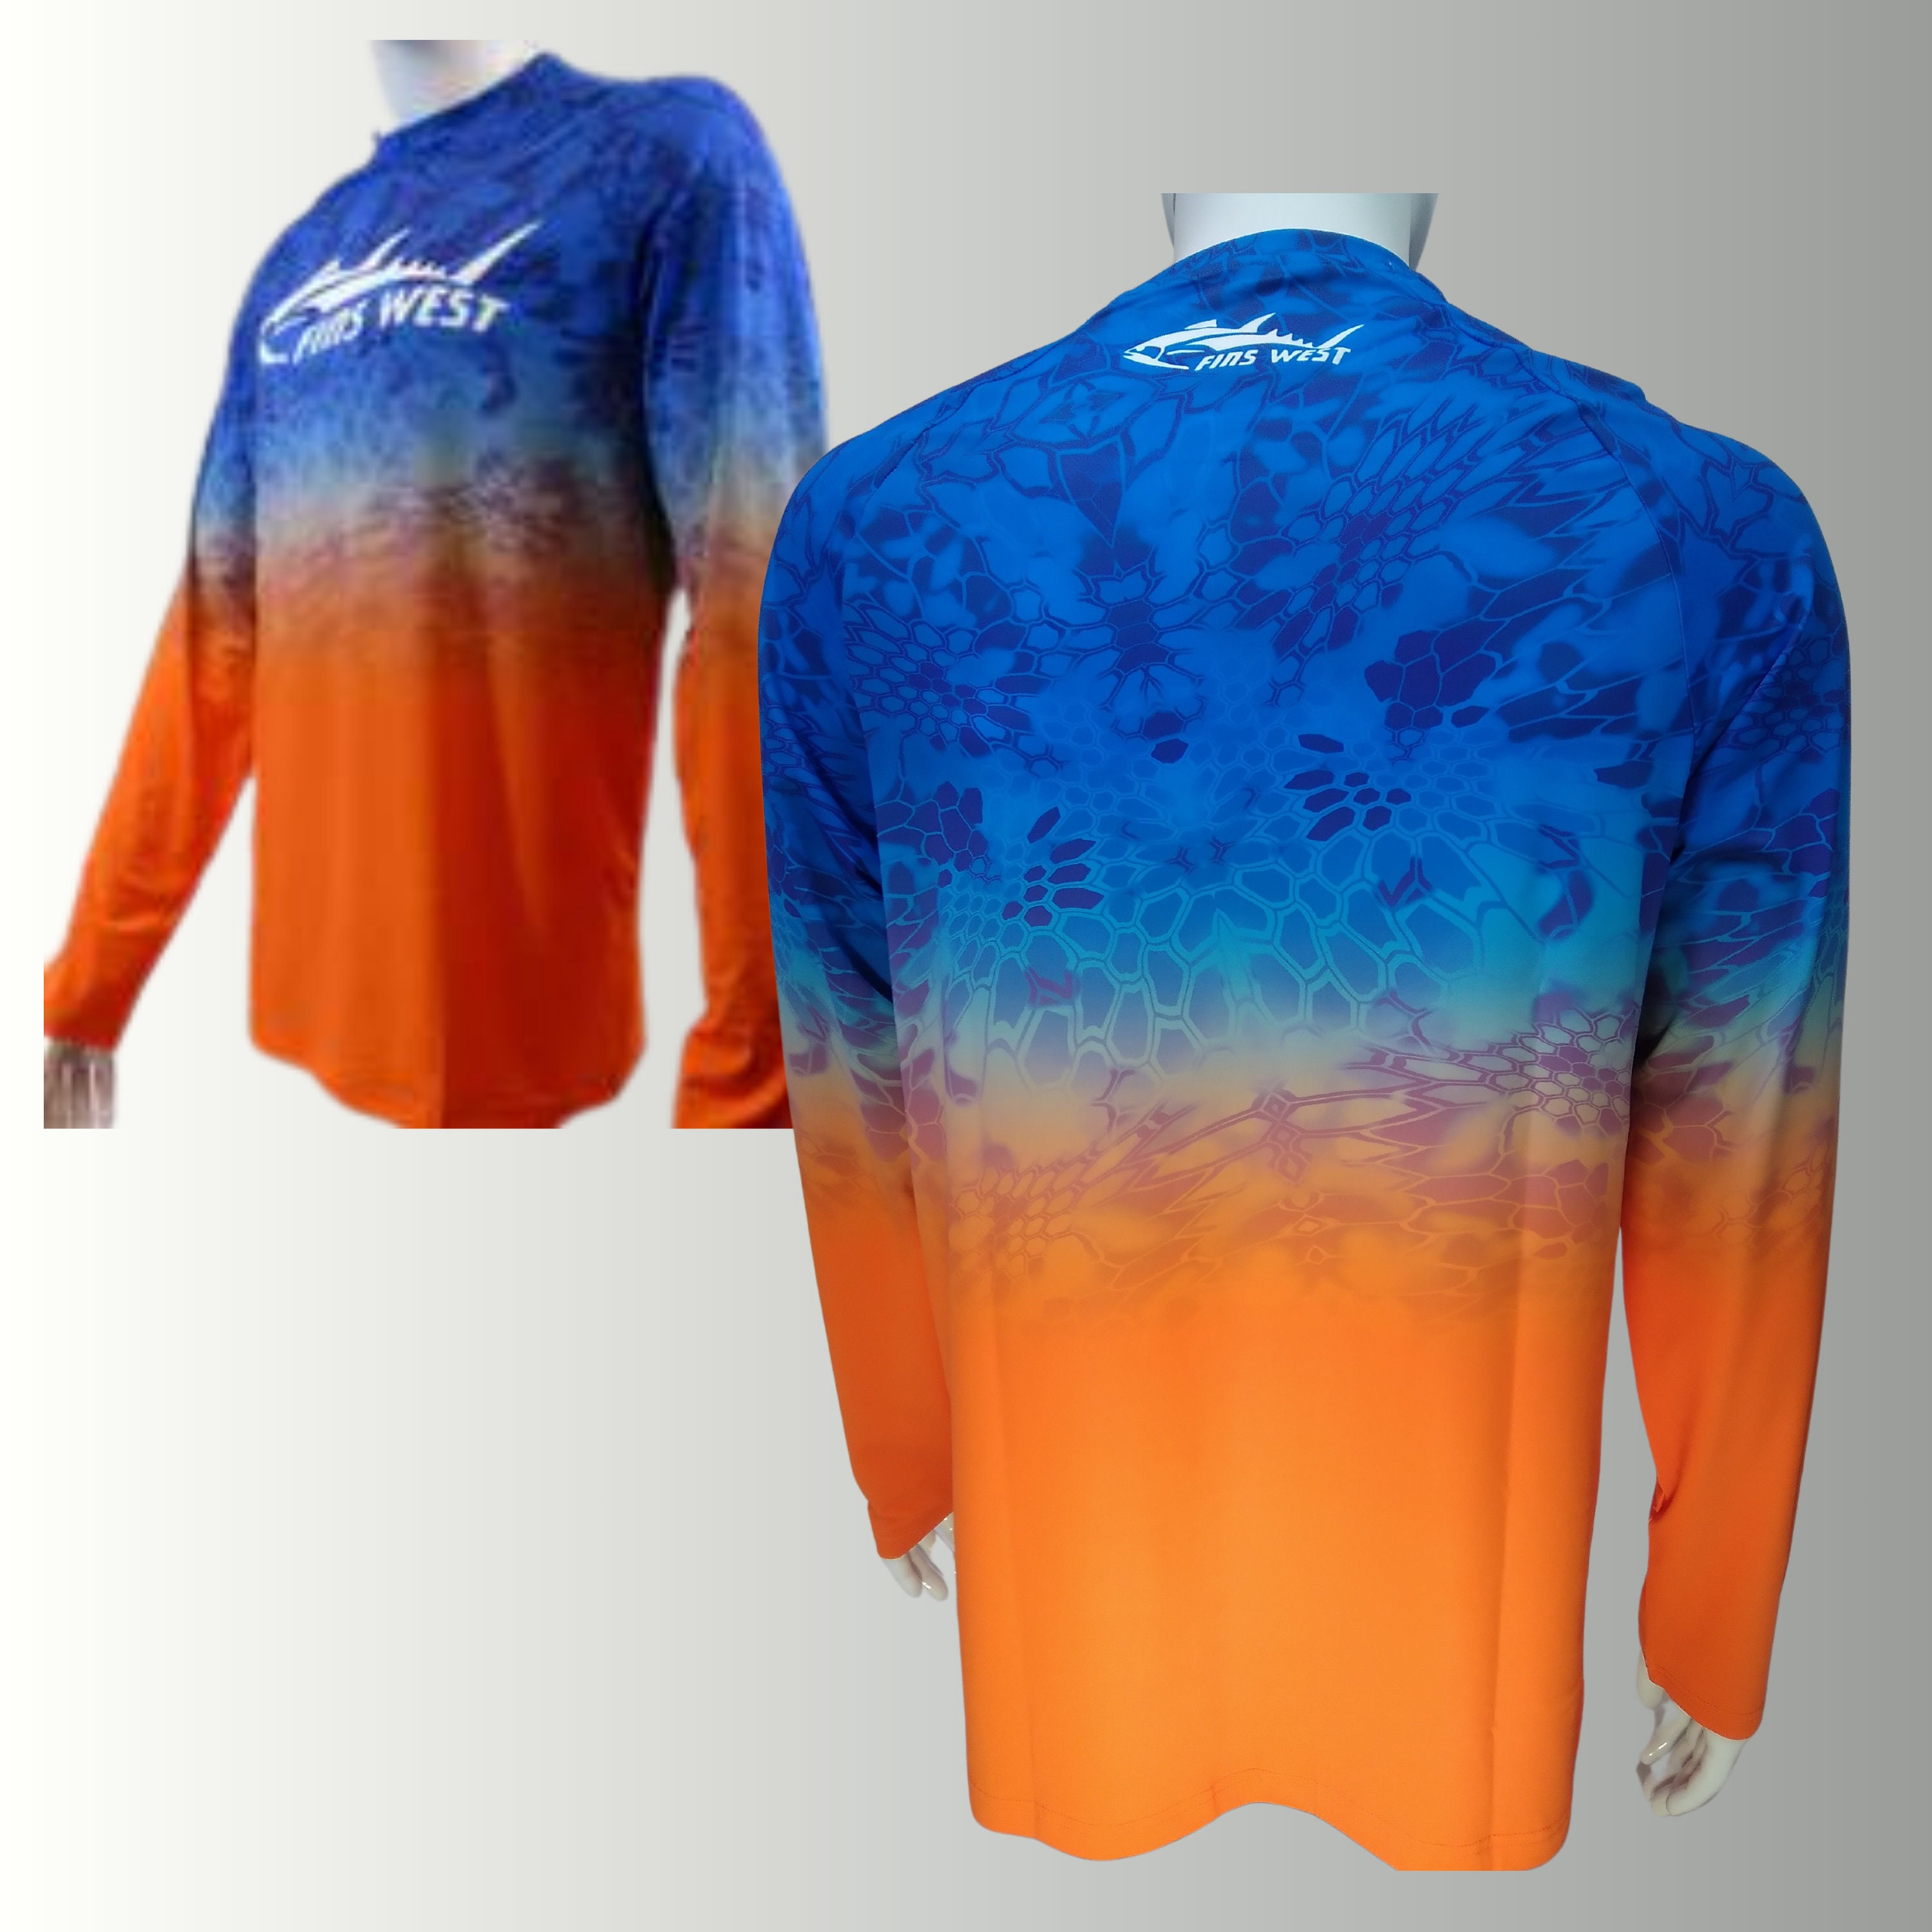 Rattlin Jack Rainbow Trout Fishing Shirt Men's UV Sun Protection